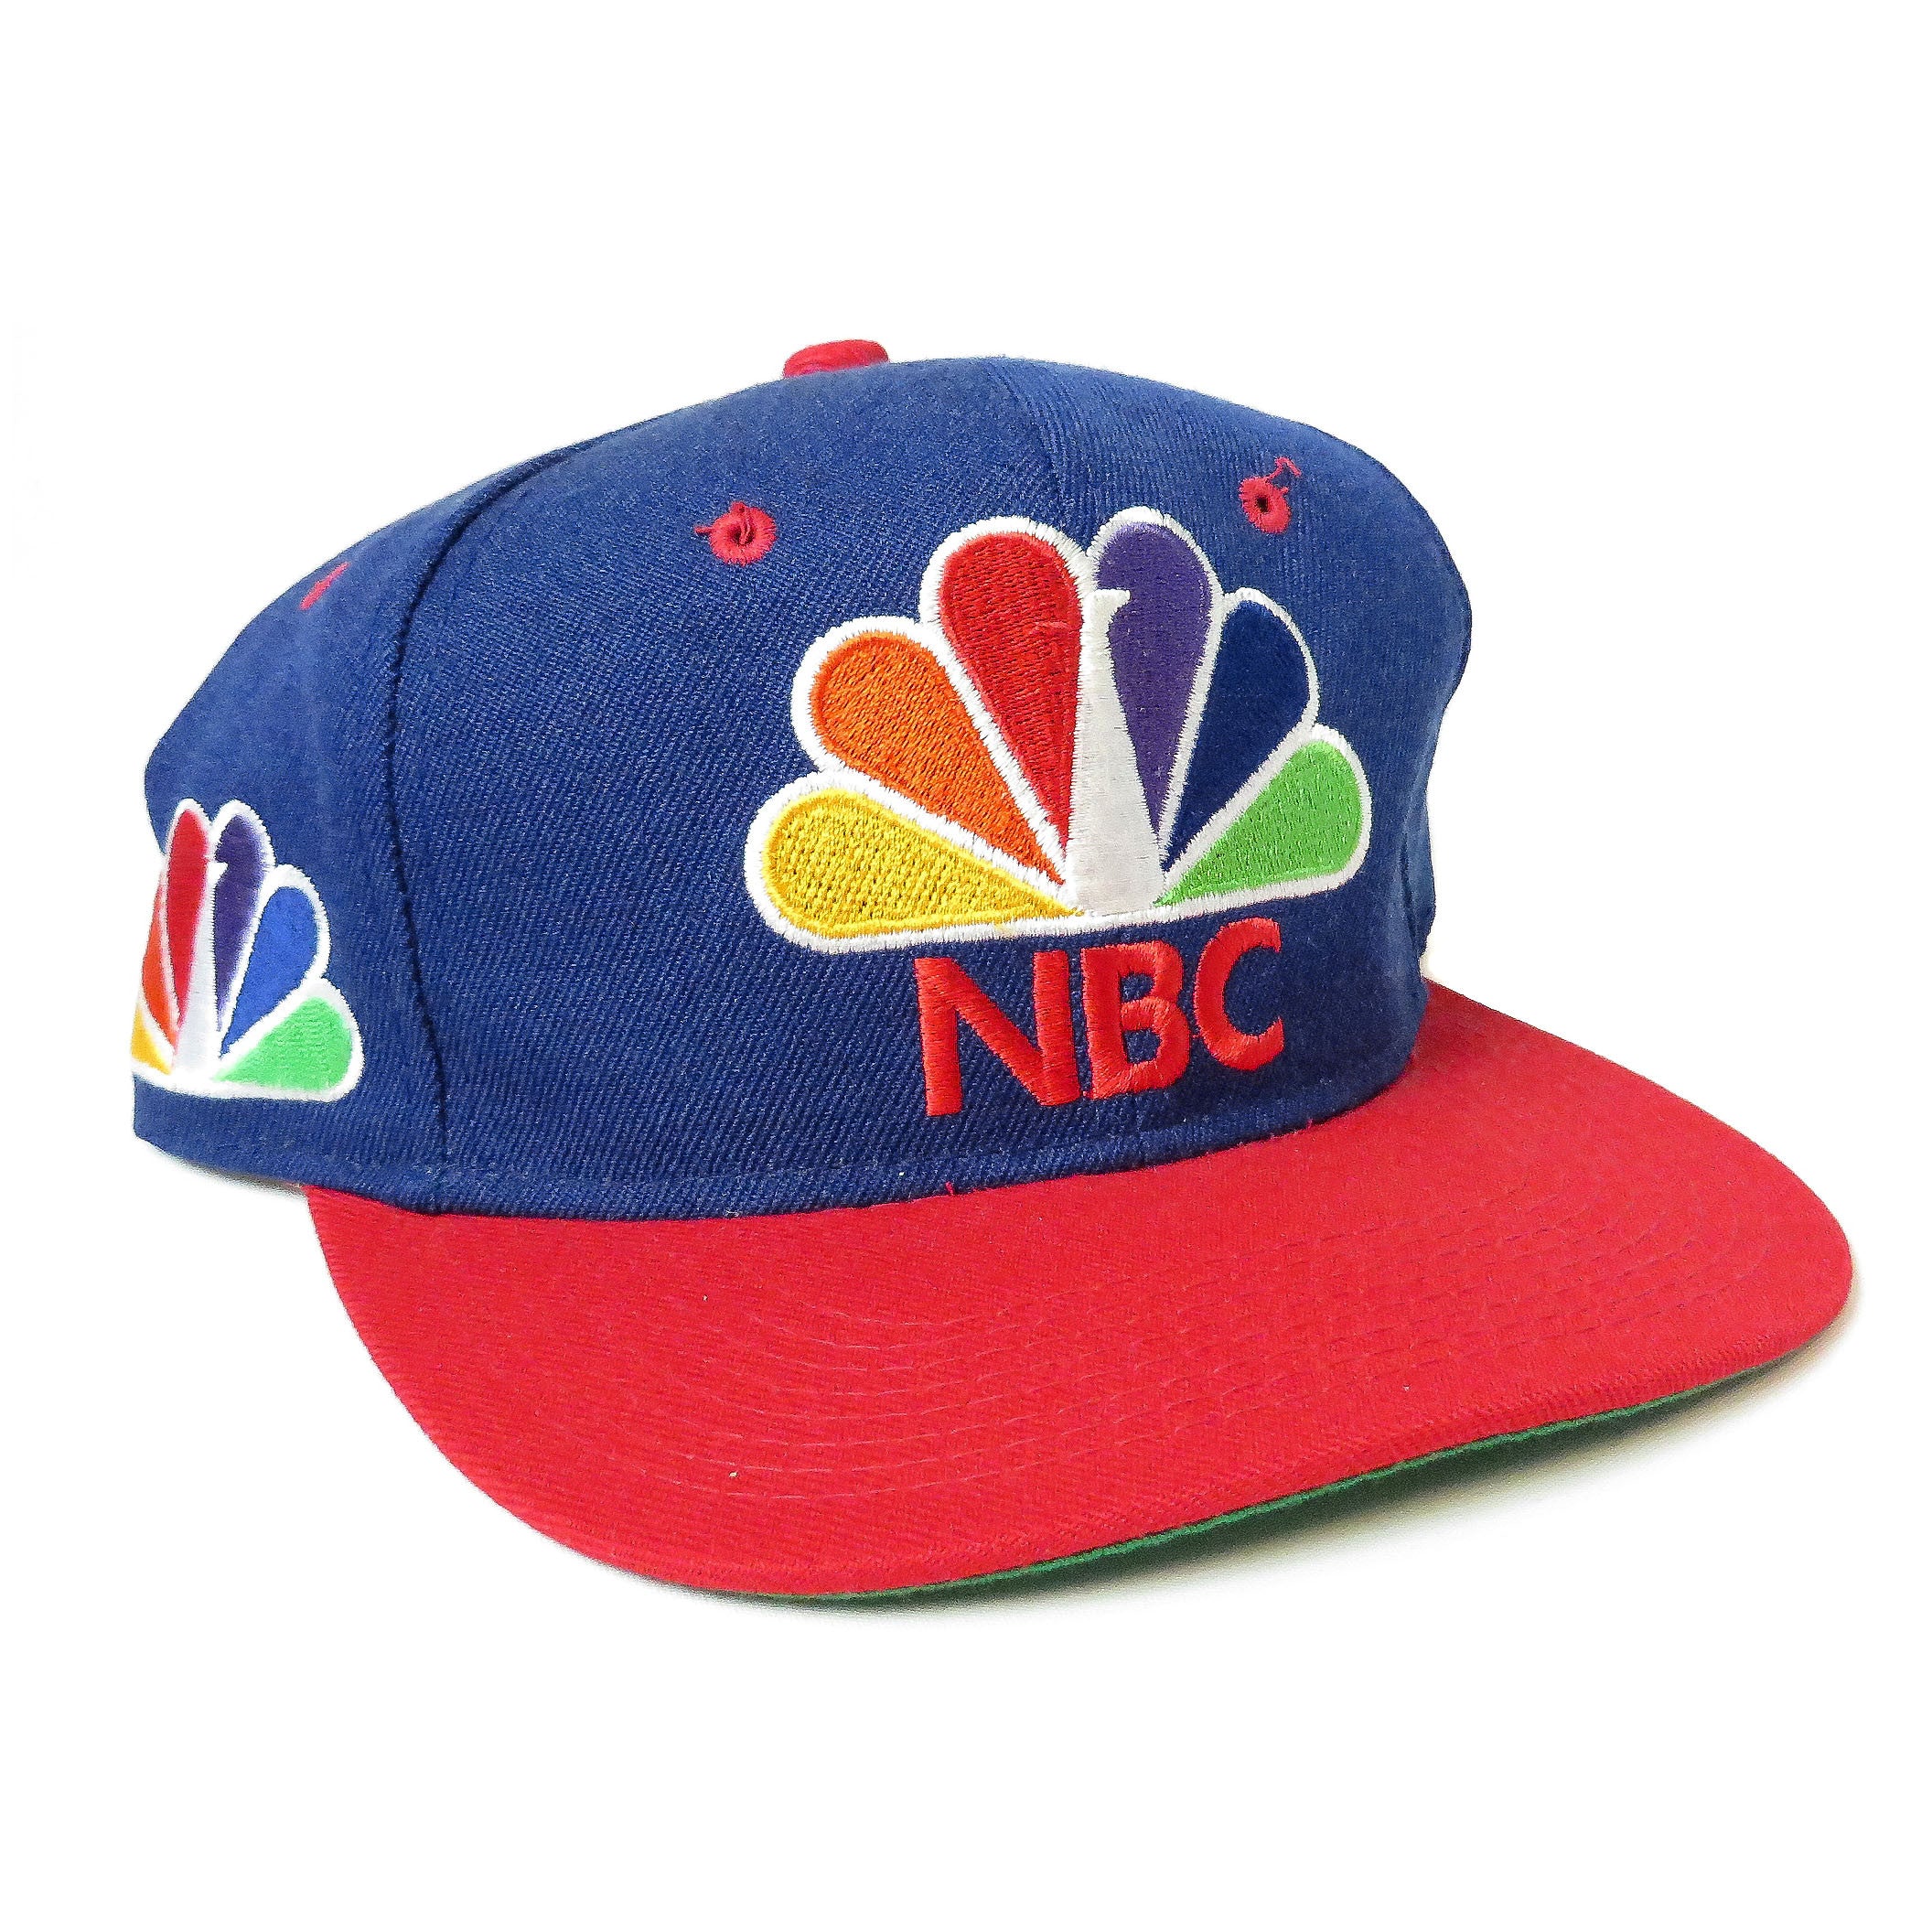 Vintage Sports Specialties NBC Snapback Hat